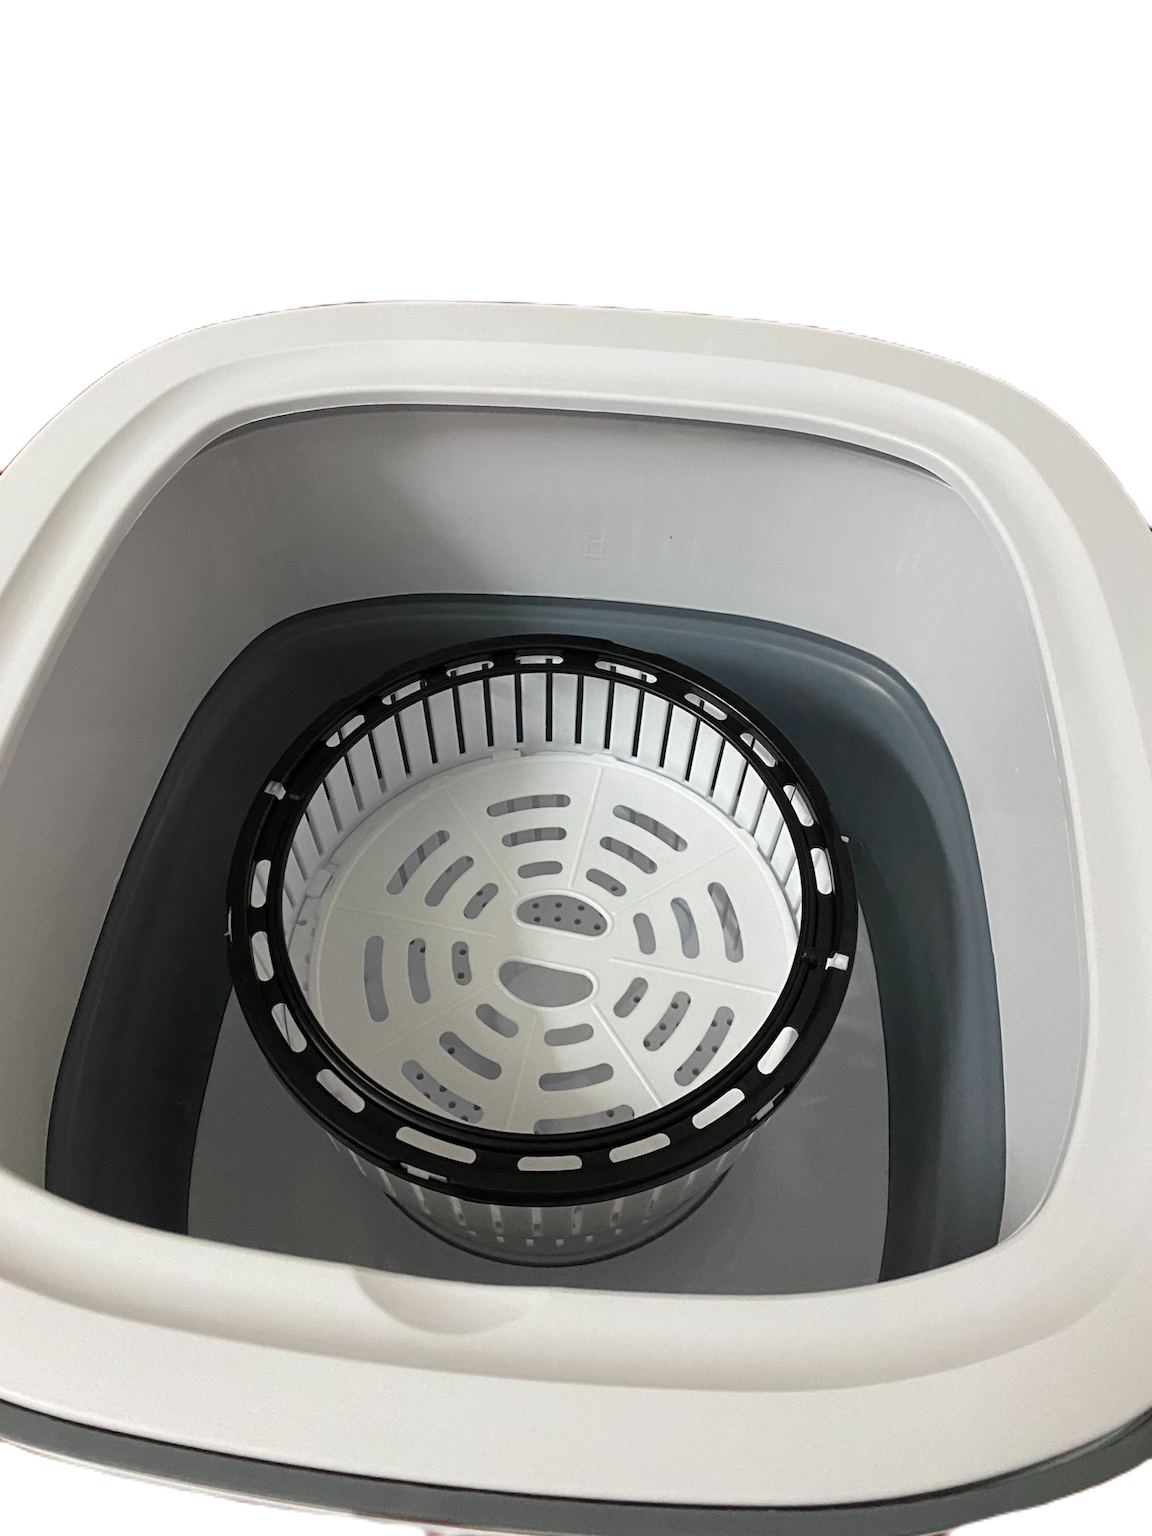 |New 2021| Máy giặt Mini Crom Cao Cấp của THW 4kg-5kg đồ giặt